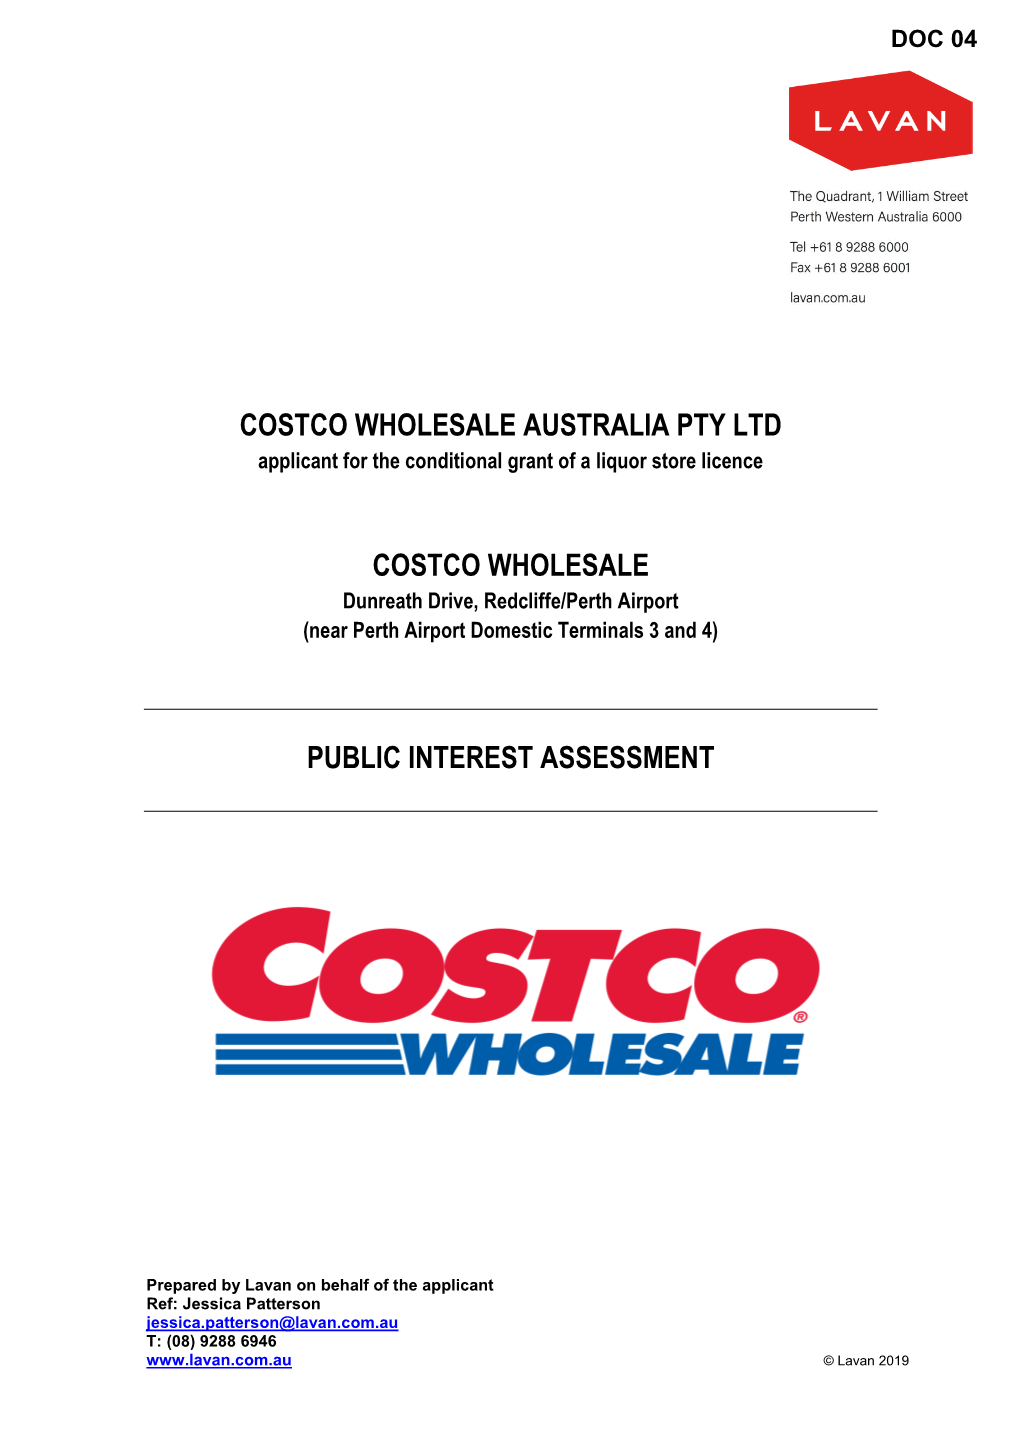 COSTCO WHOLESALE AUSTRALIA PTY LTD Applicant for the Conditional Grant of a Liquor Store Licence